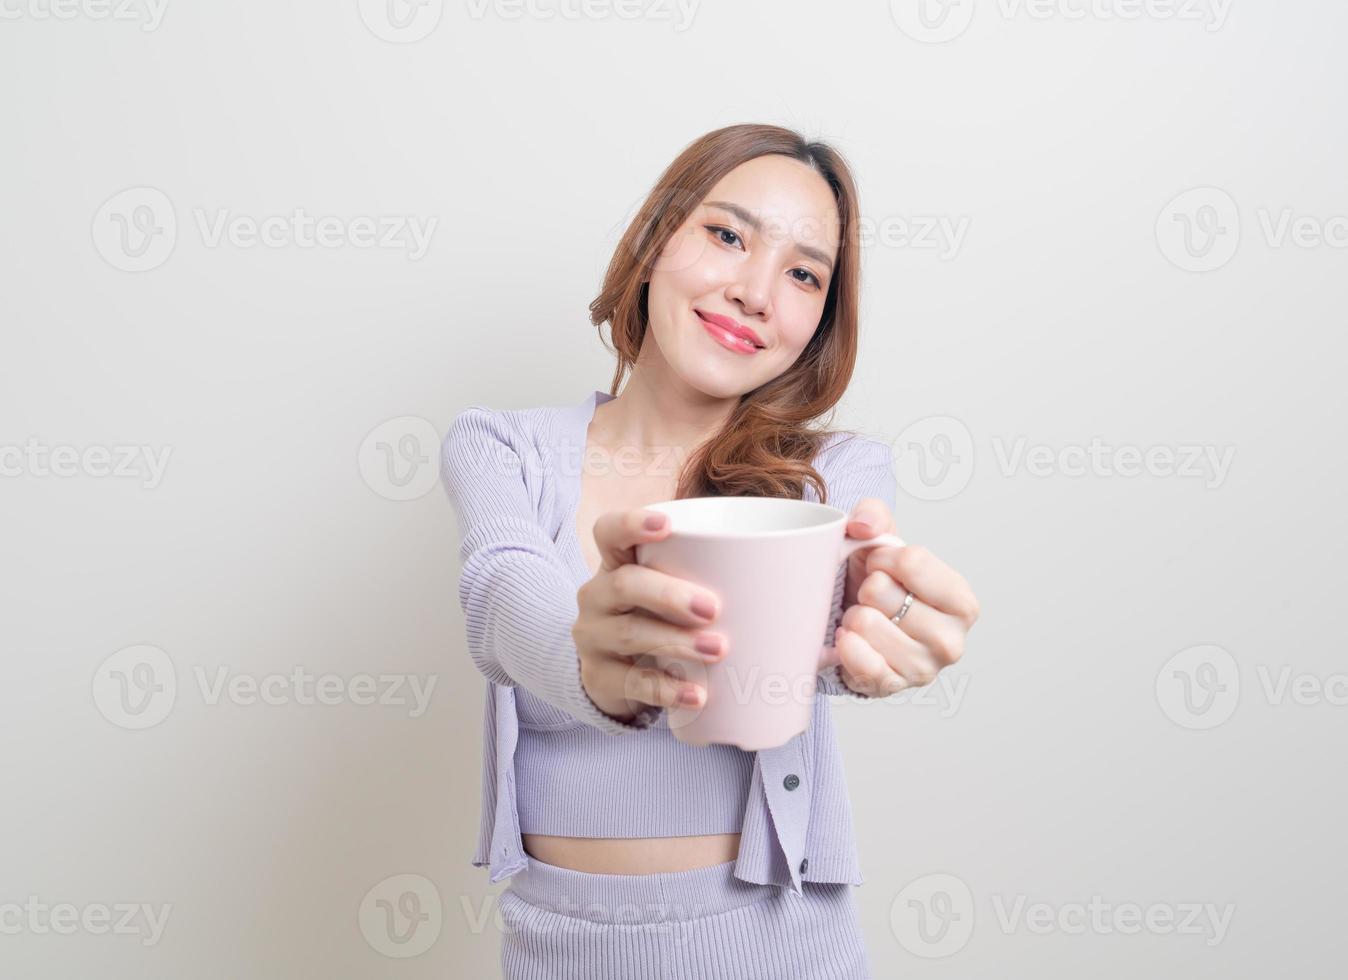 Retrato hermosa mujer asiática sosteniendo una taza de café o una taza sobre fondo blanco. foto